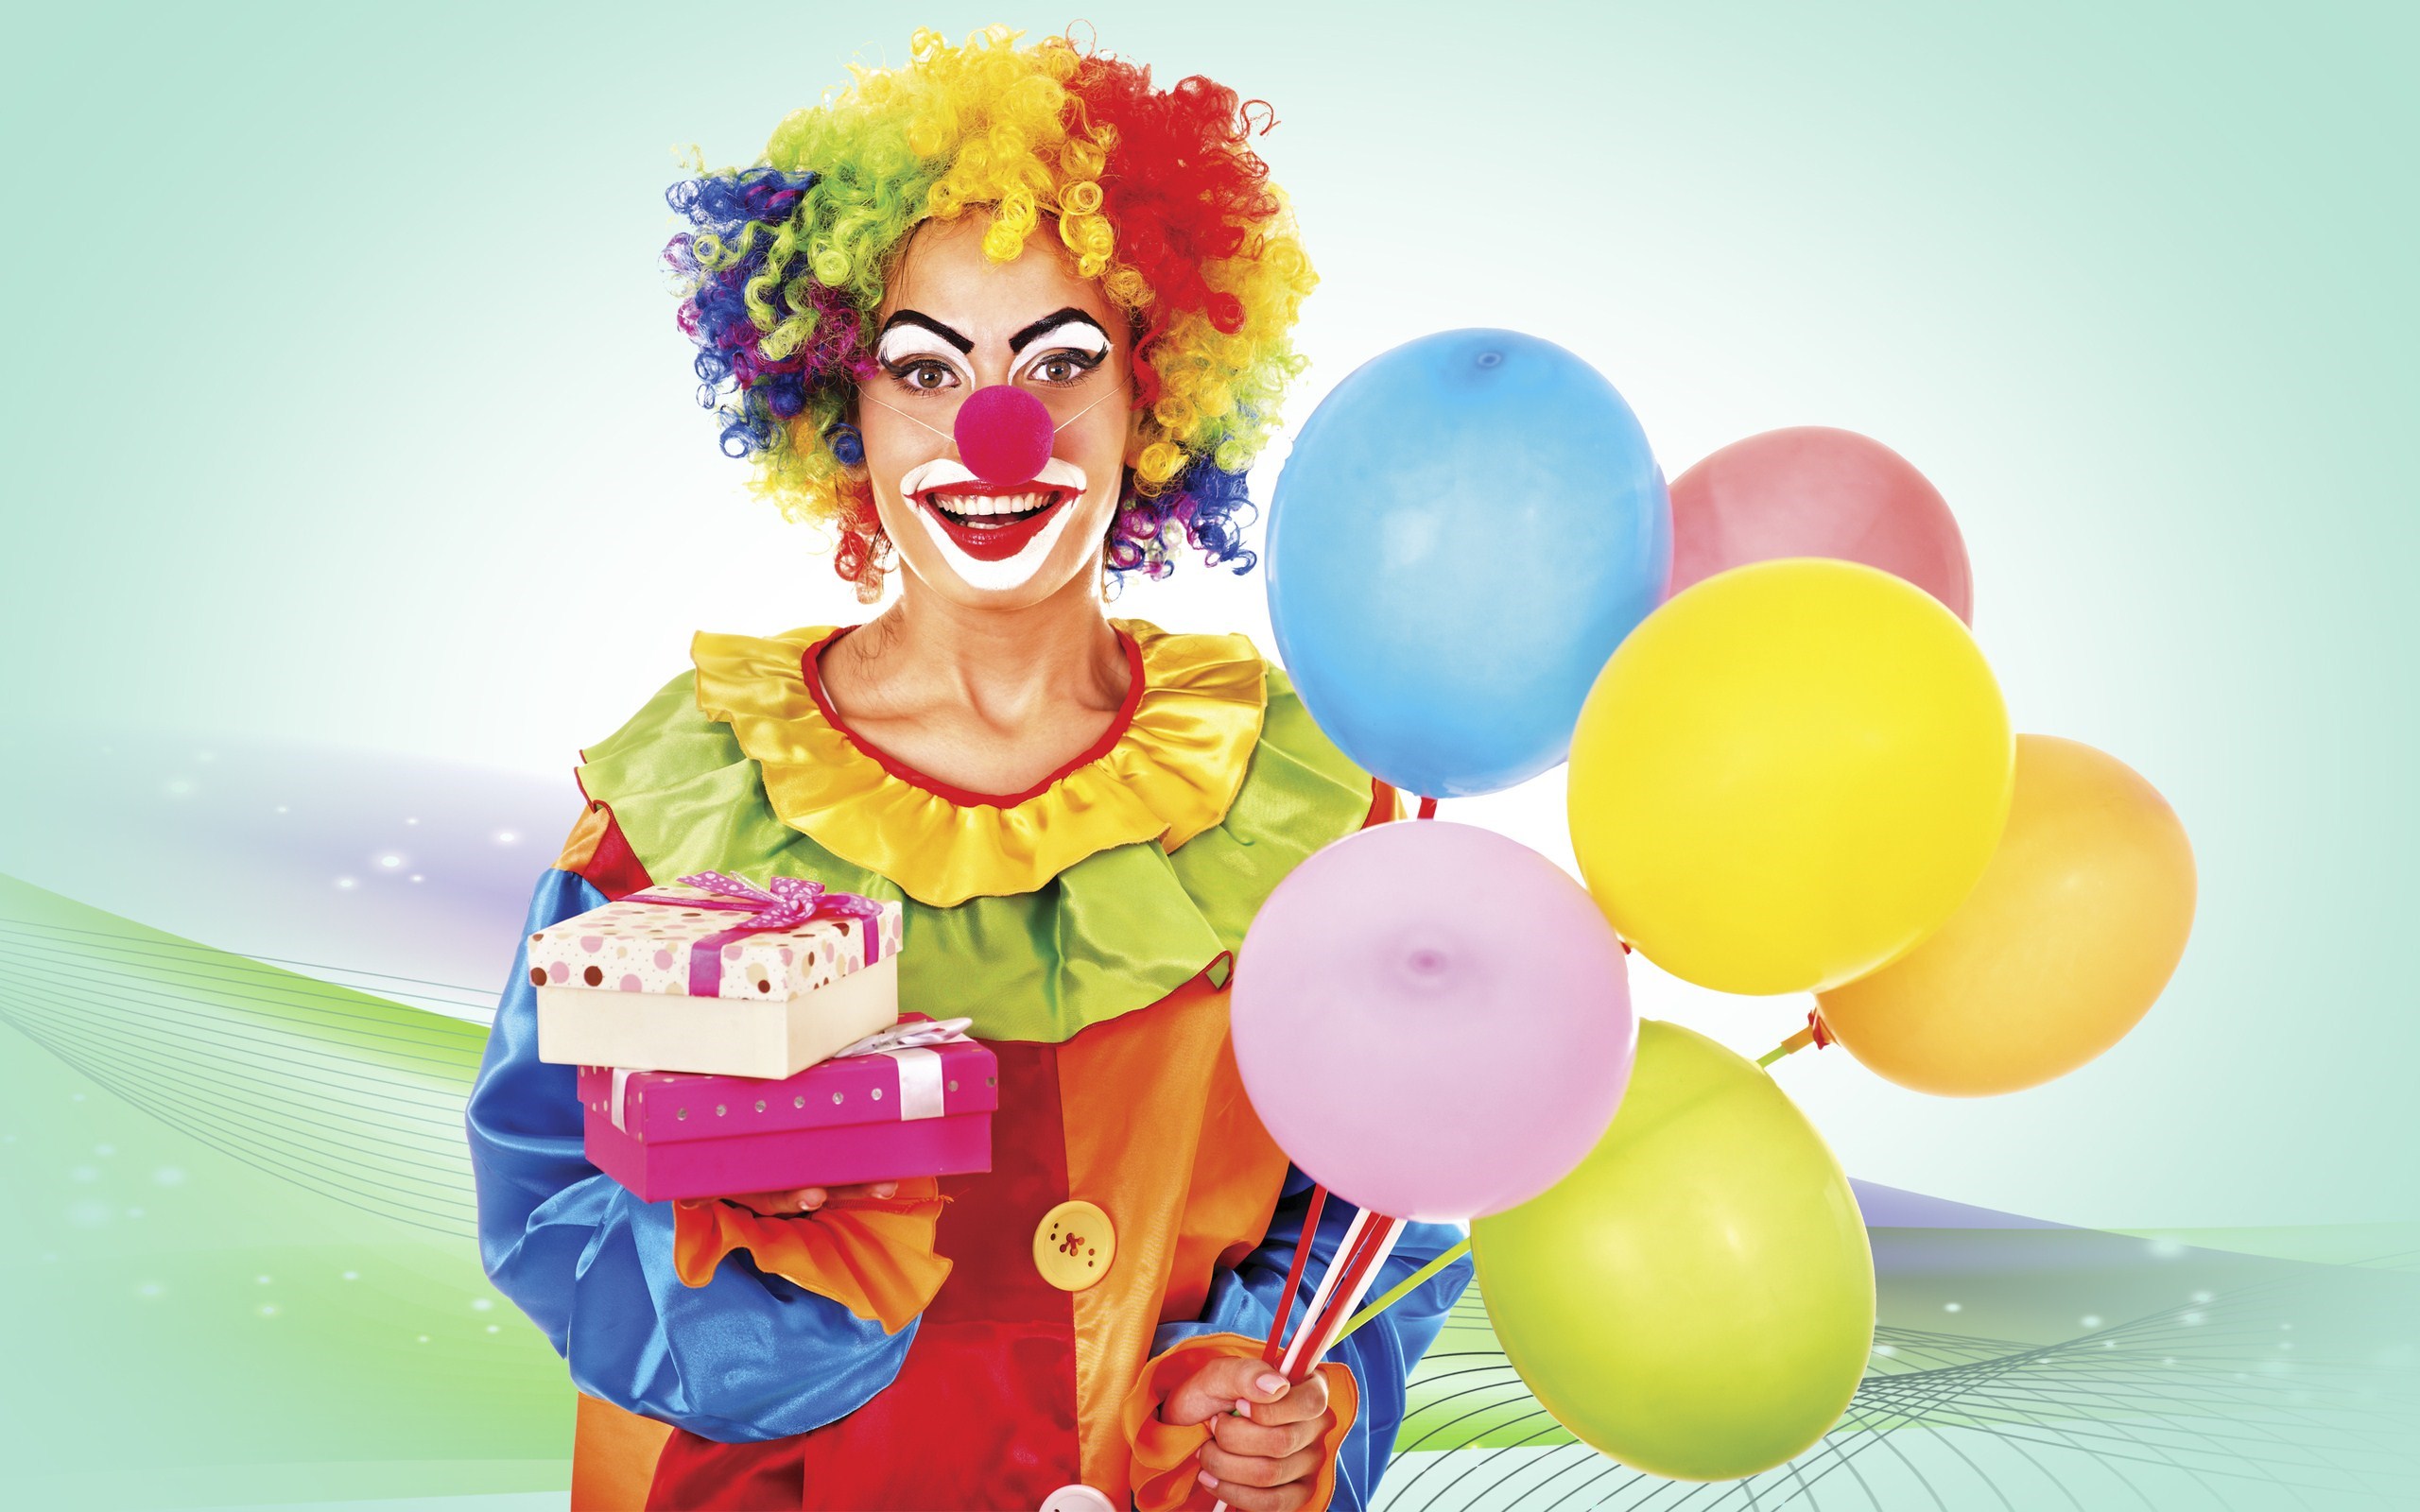 Funny Clown Balloons Gifts wallpaperx1600